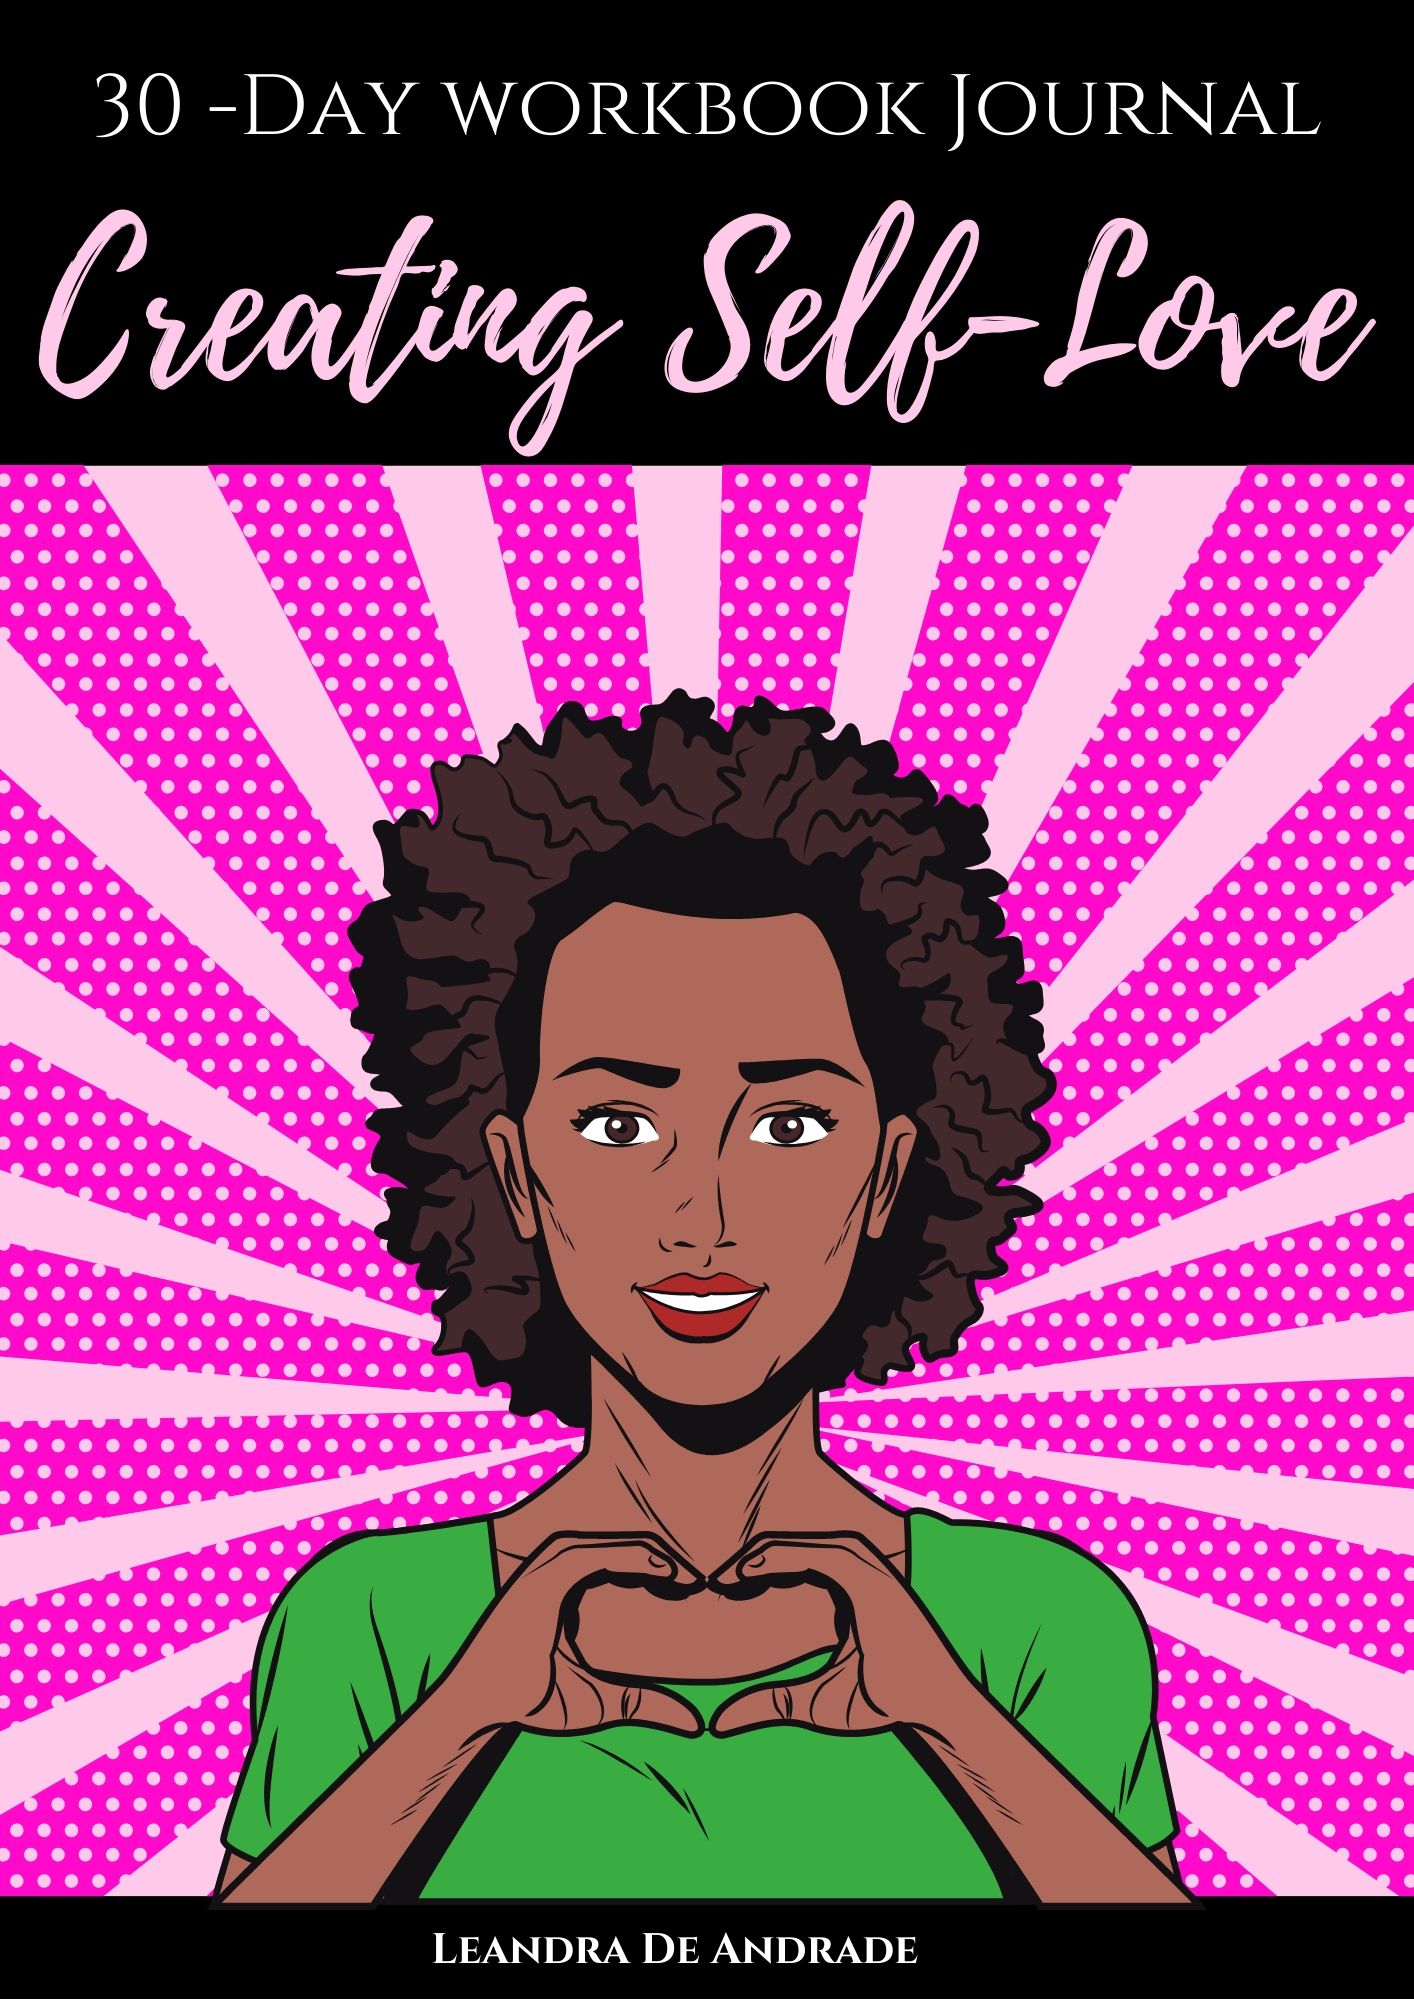 Creating self-love workbook